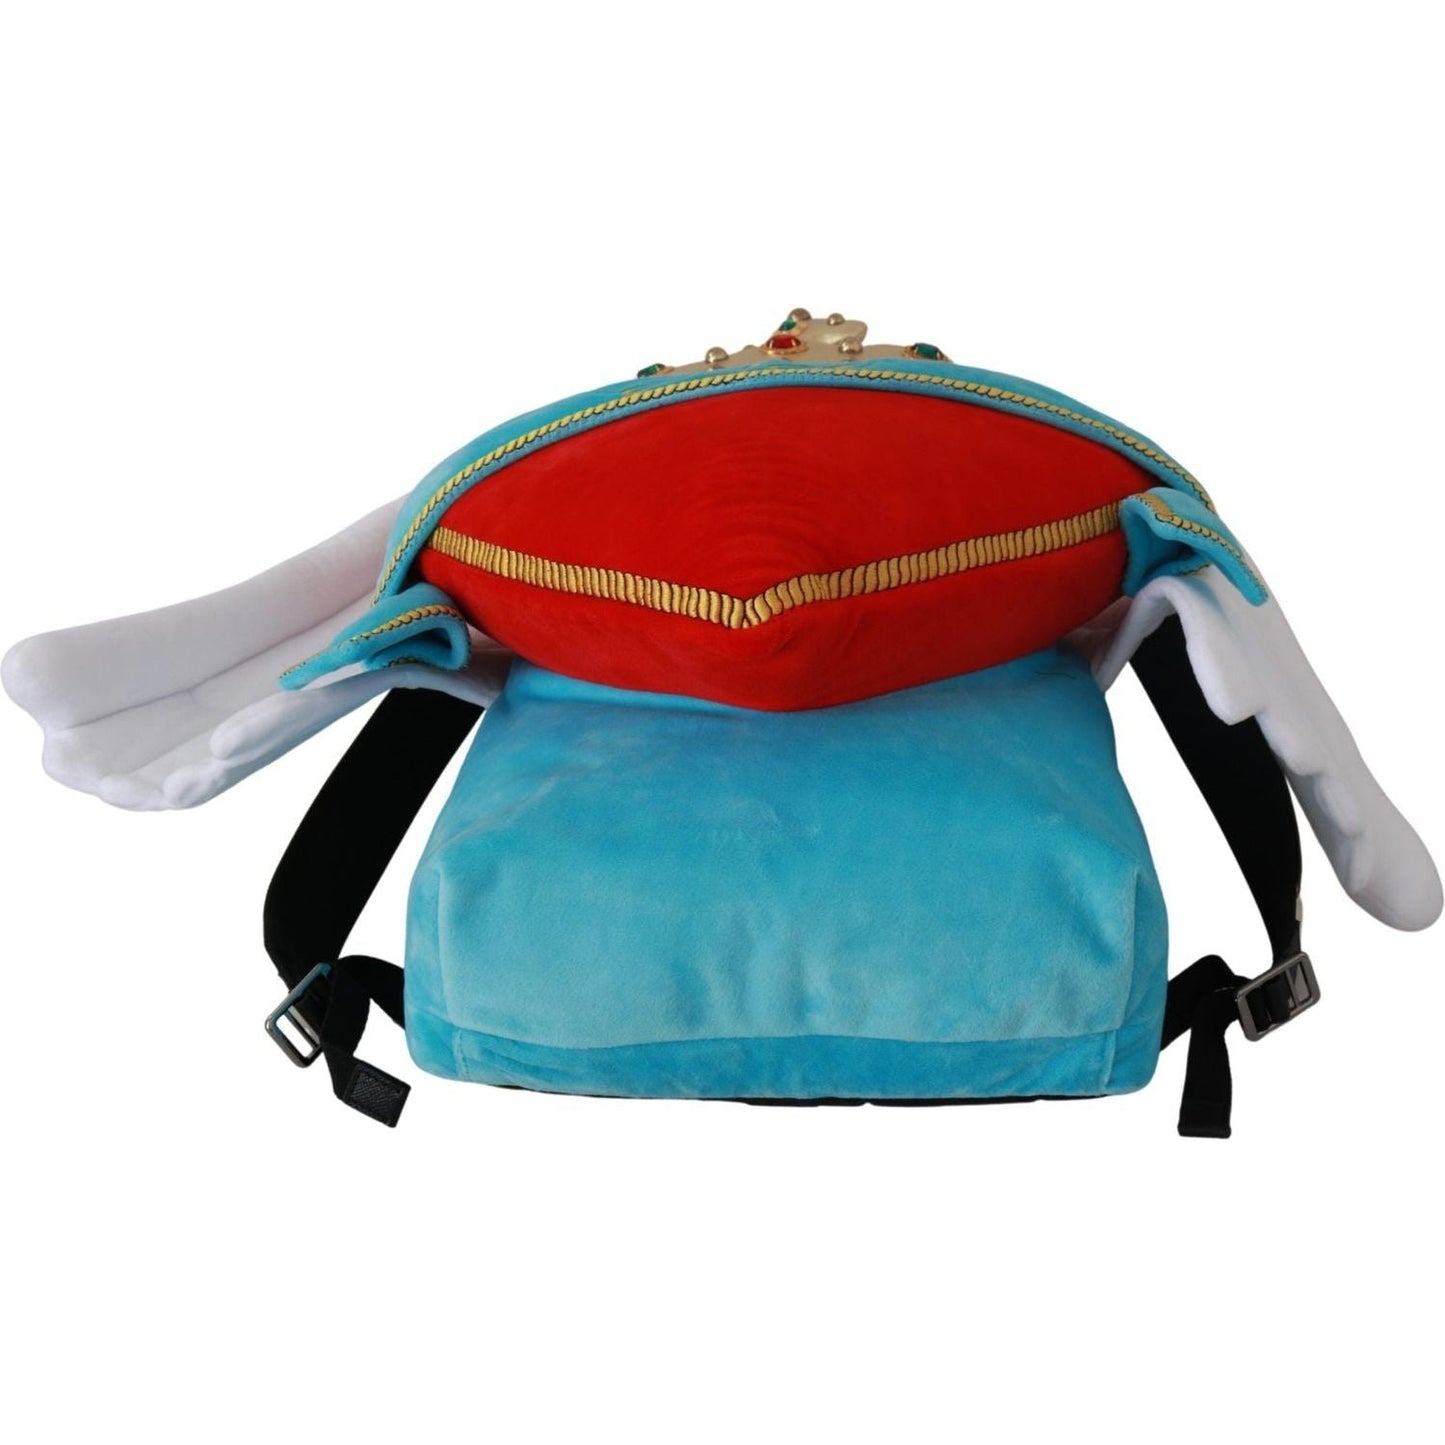 Dolce & Gabbana Jeweled Heart Wings Backpack Backpack red-blue-heart-wings-dg-crown-school-backpack IMG_9793-1-scaled-eace34c5-c46.jpg